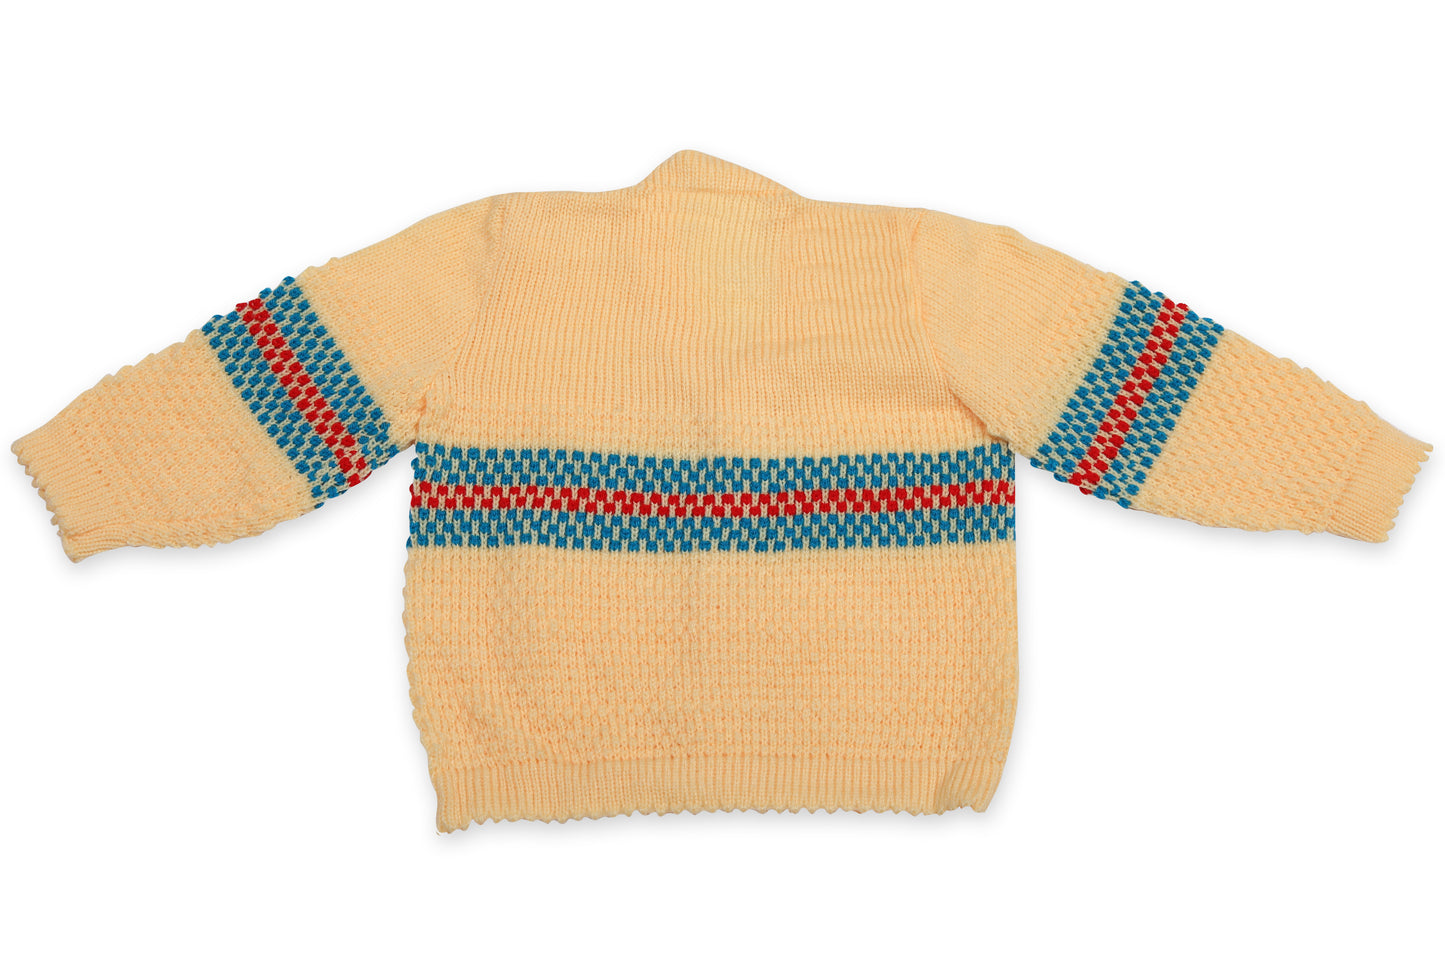 Baby Knitted Sweater, Leggings, Cap & Booties Full Suit (4 Pcs) Mango